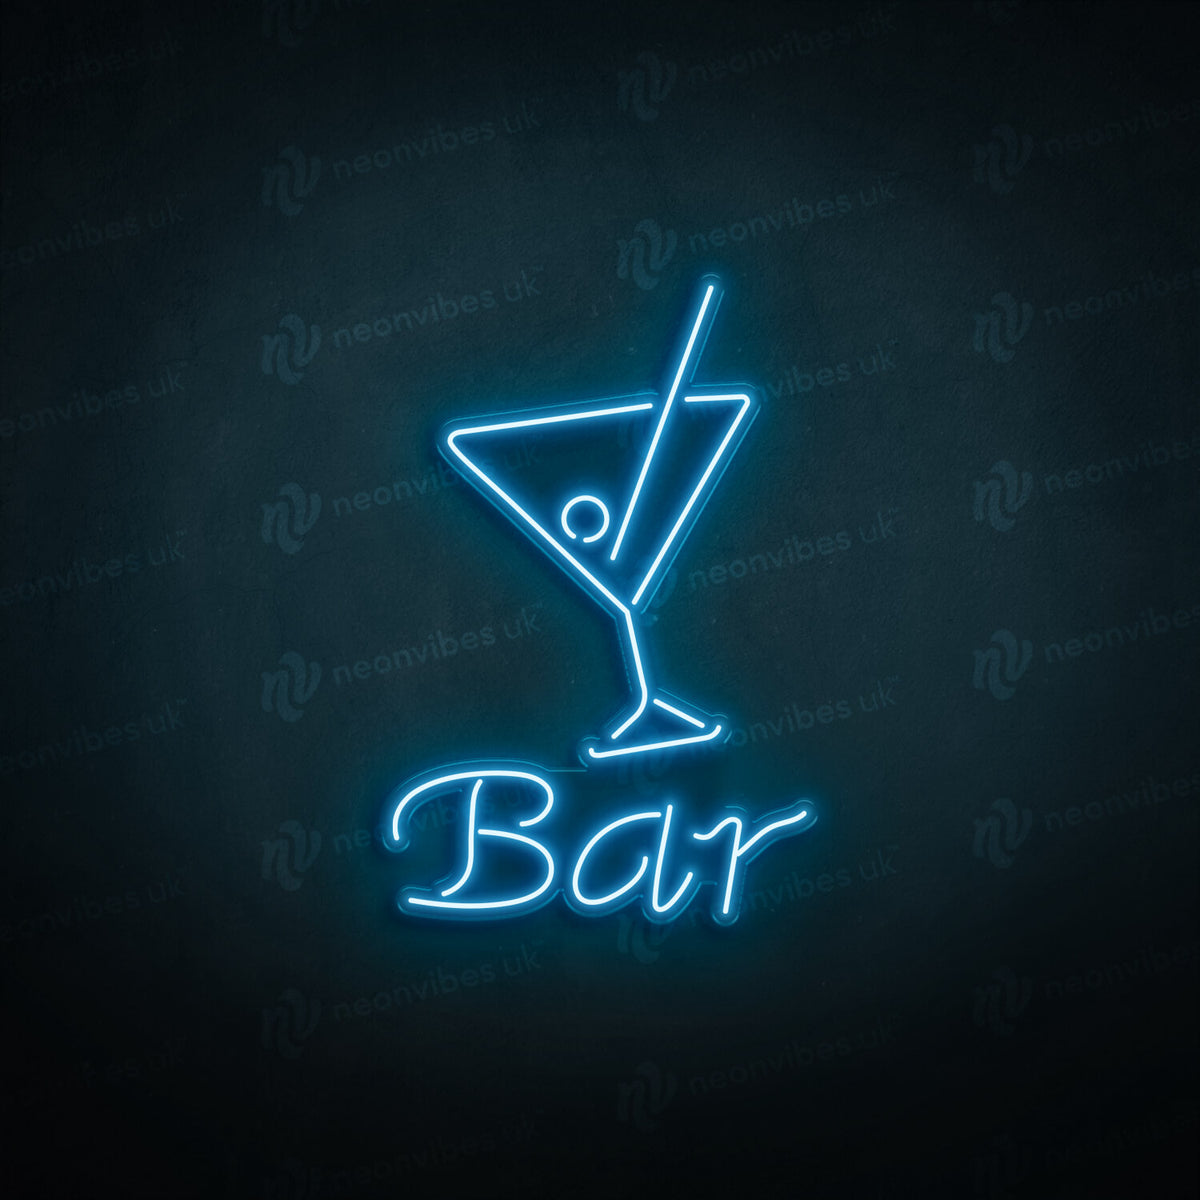 Bar V3 neon sign